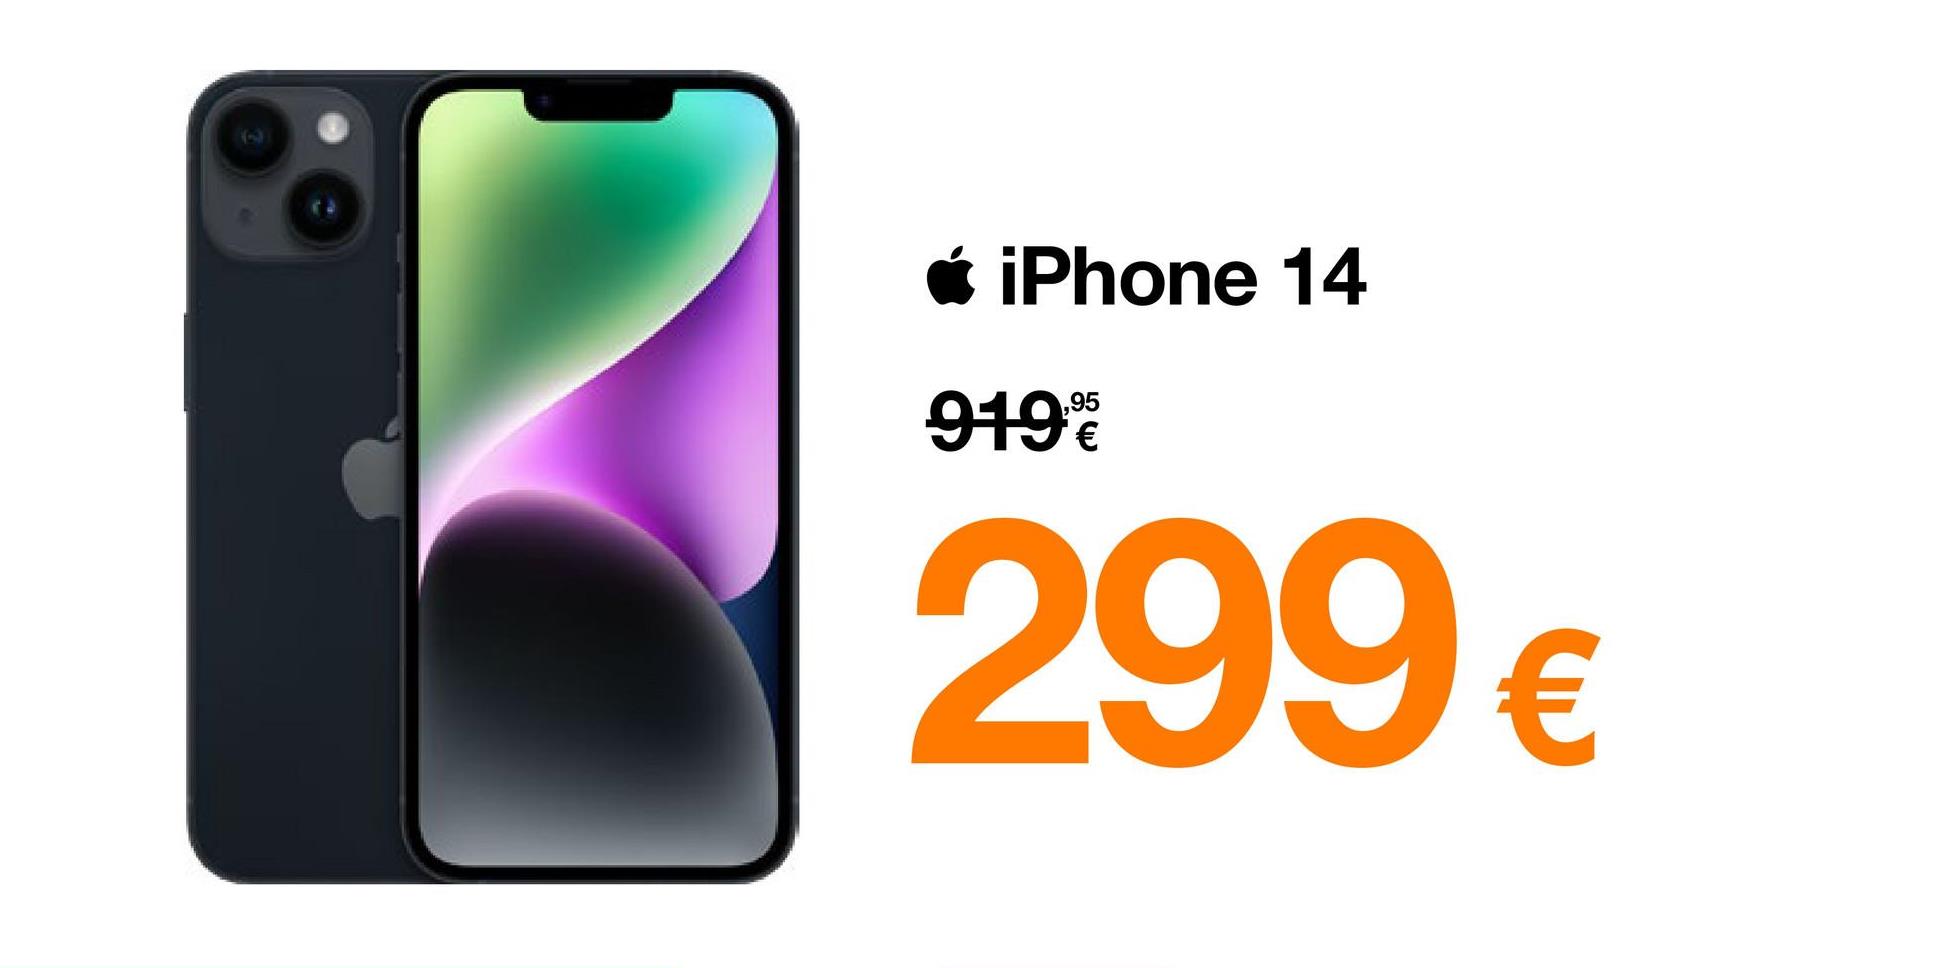 iPhone 14
9199
299 €